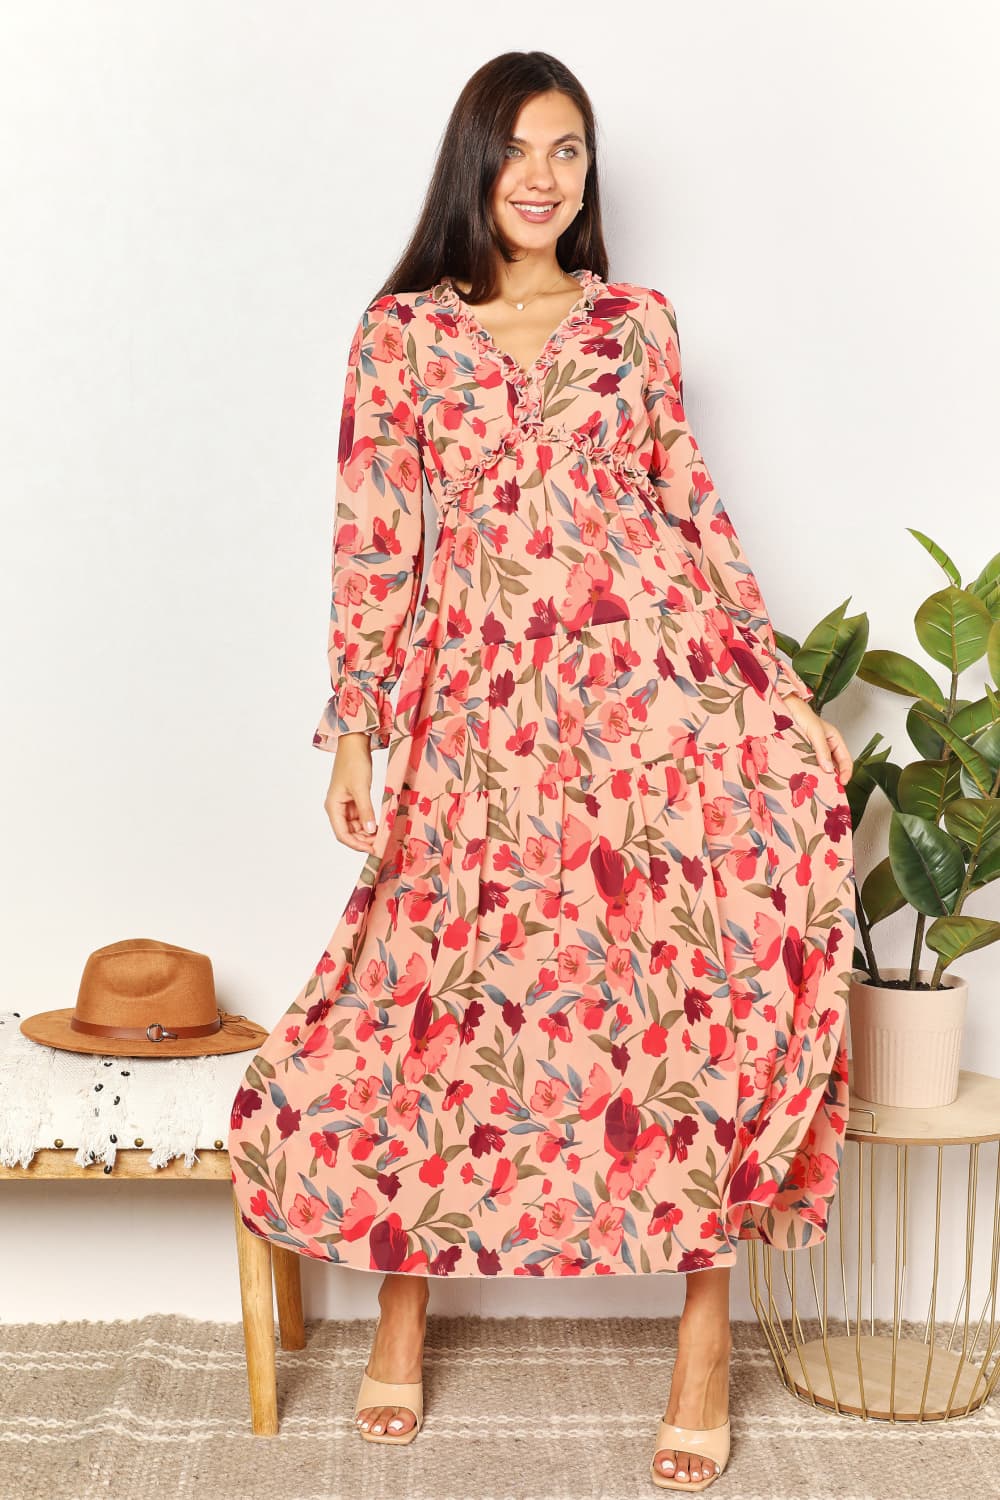 Double Take Floral Maxi Dress